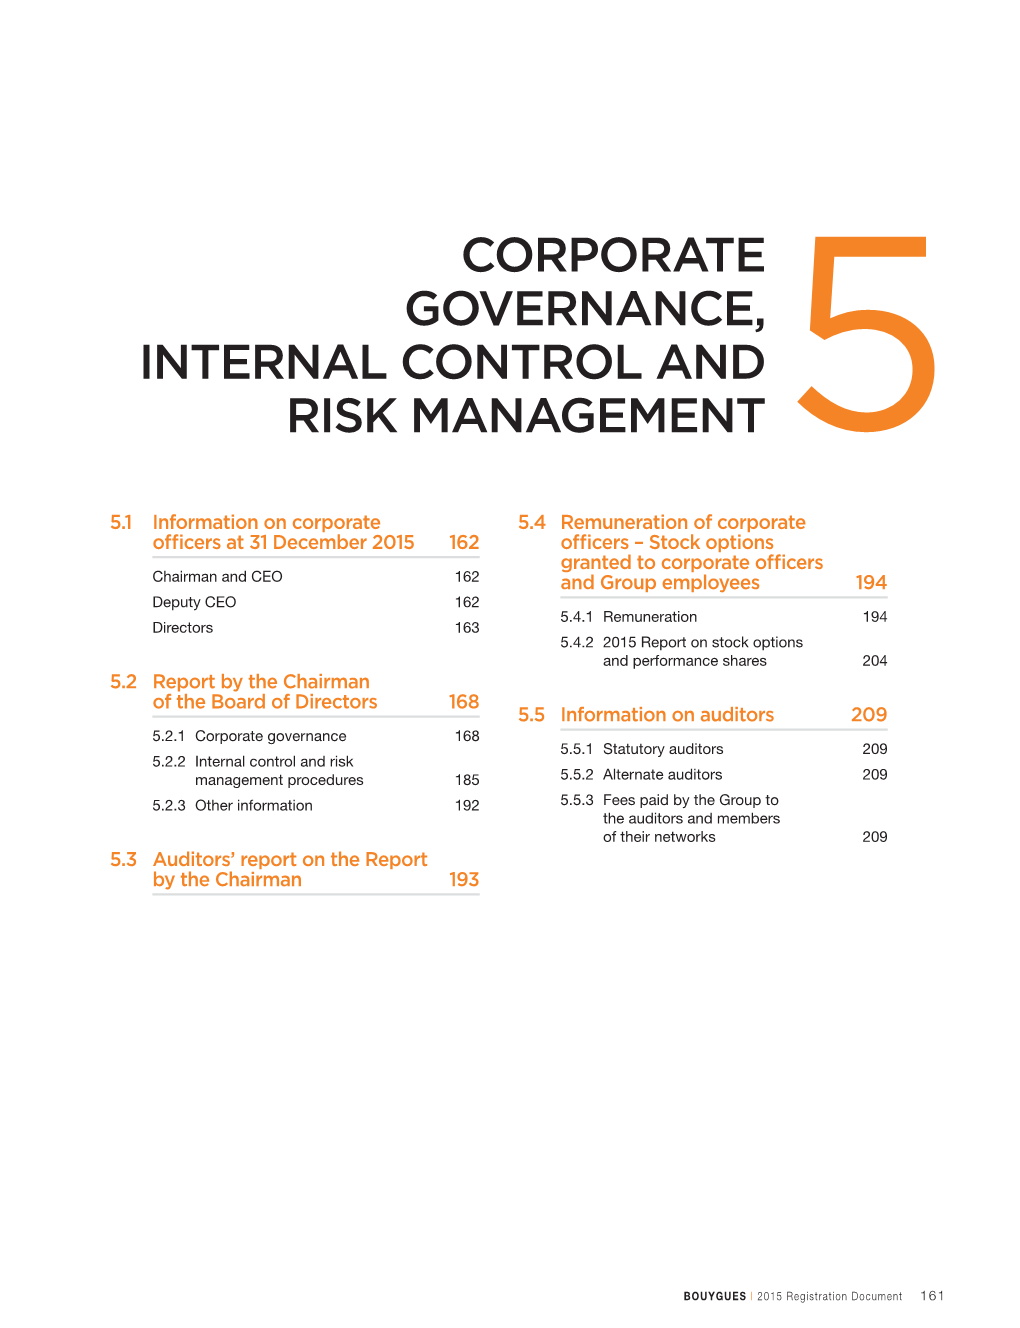 Corporate Governance, Internal